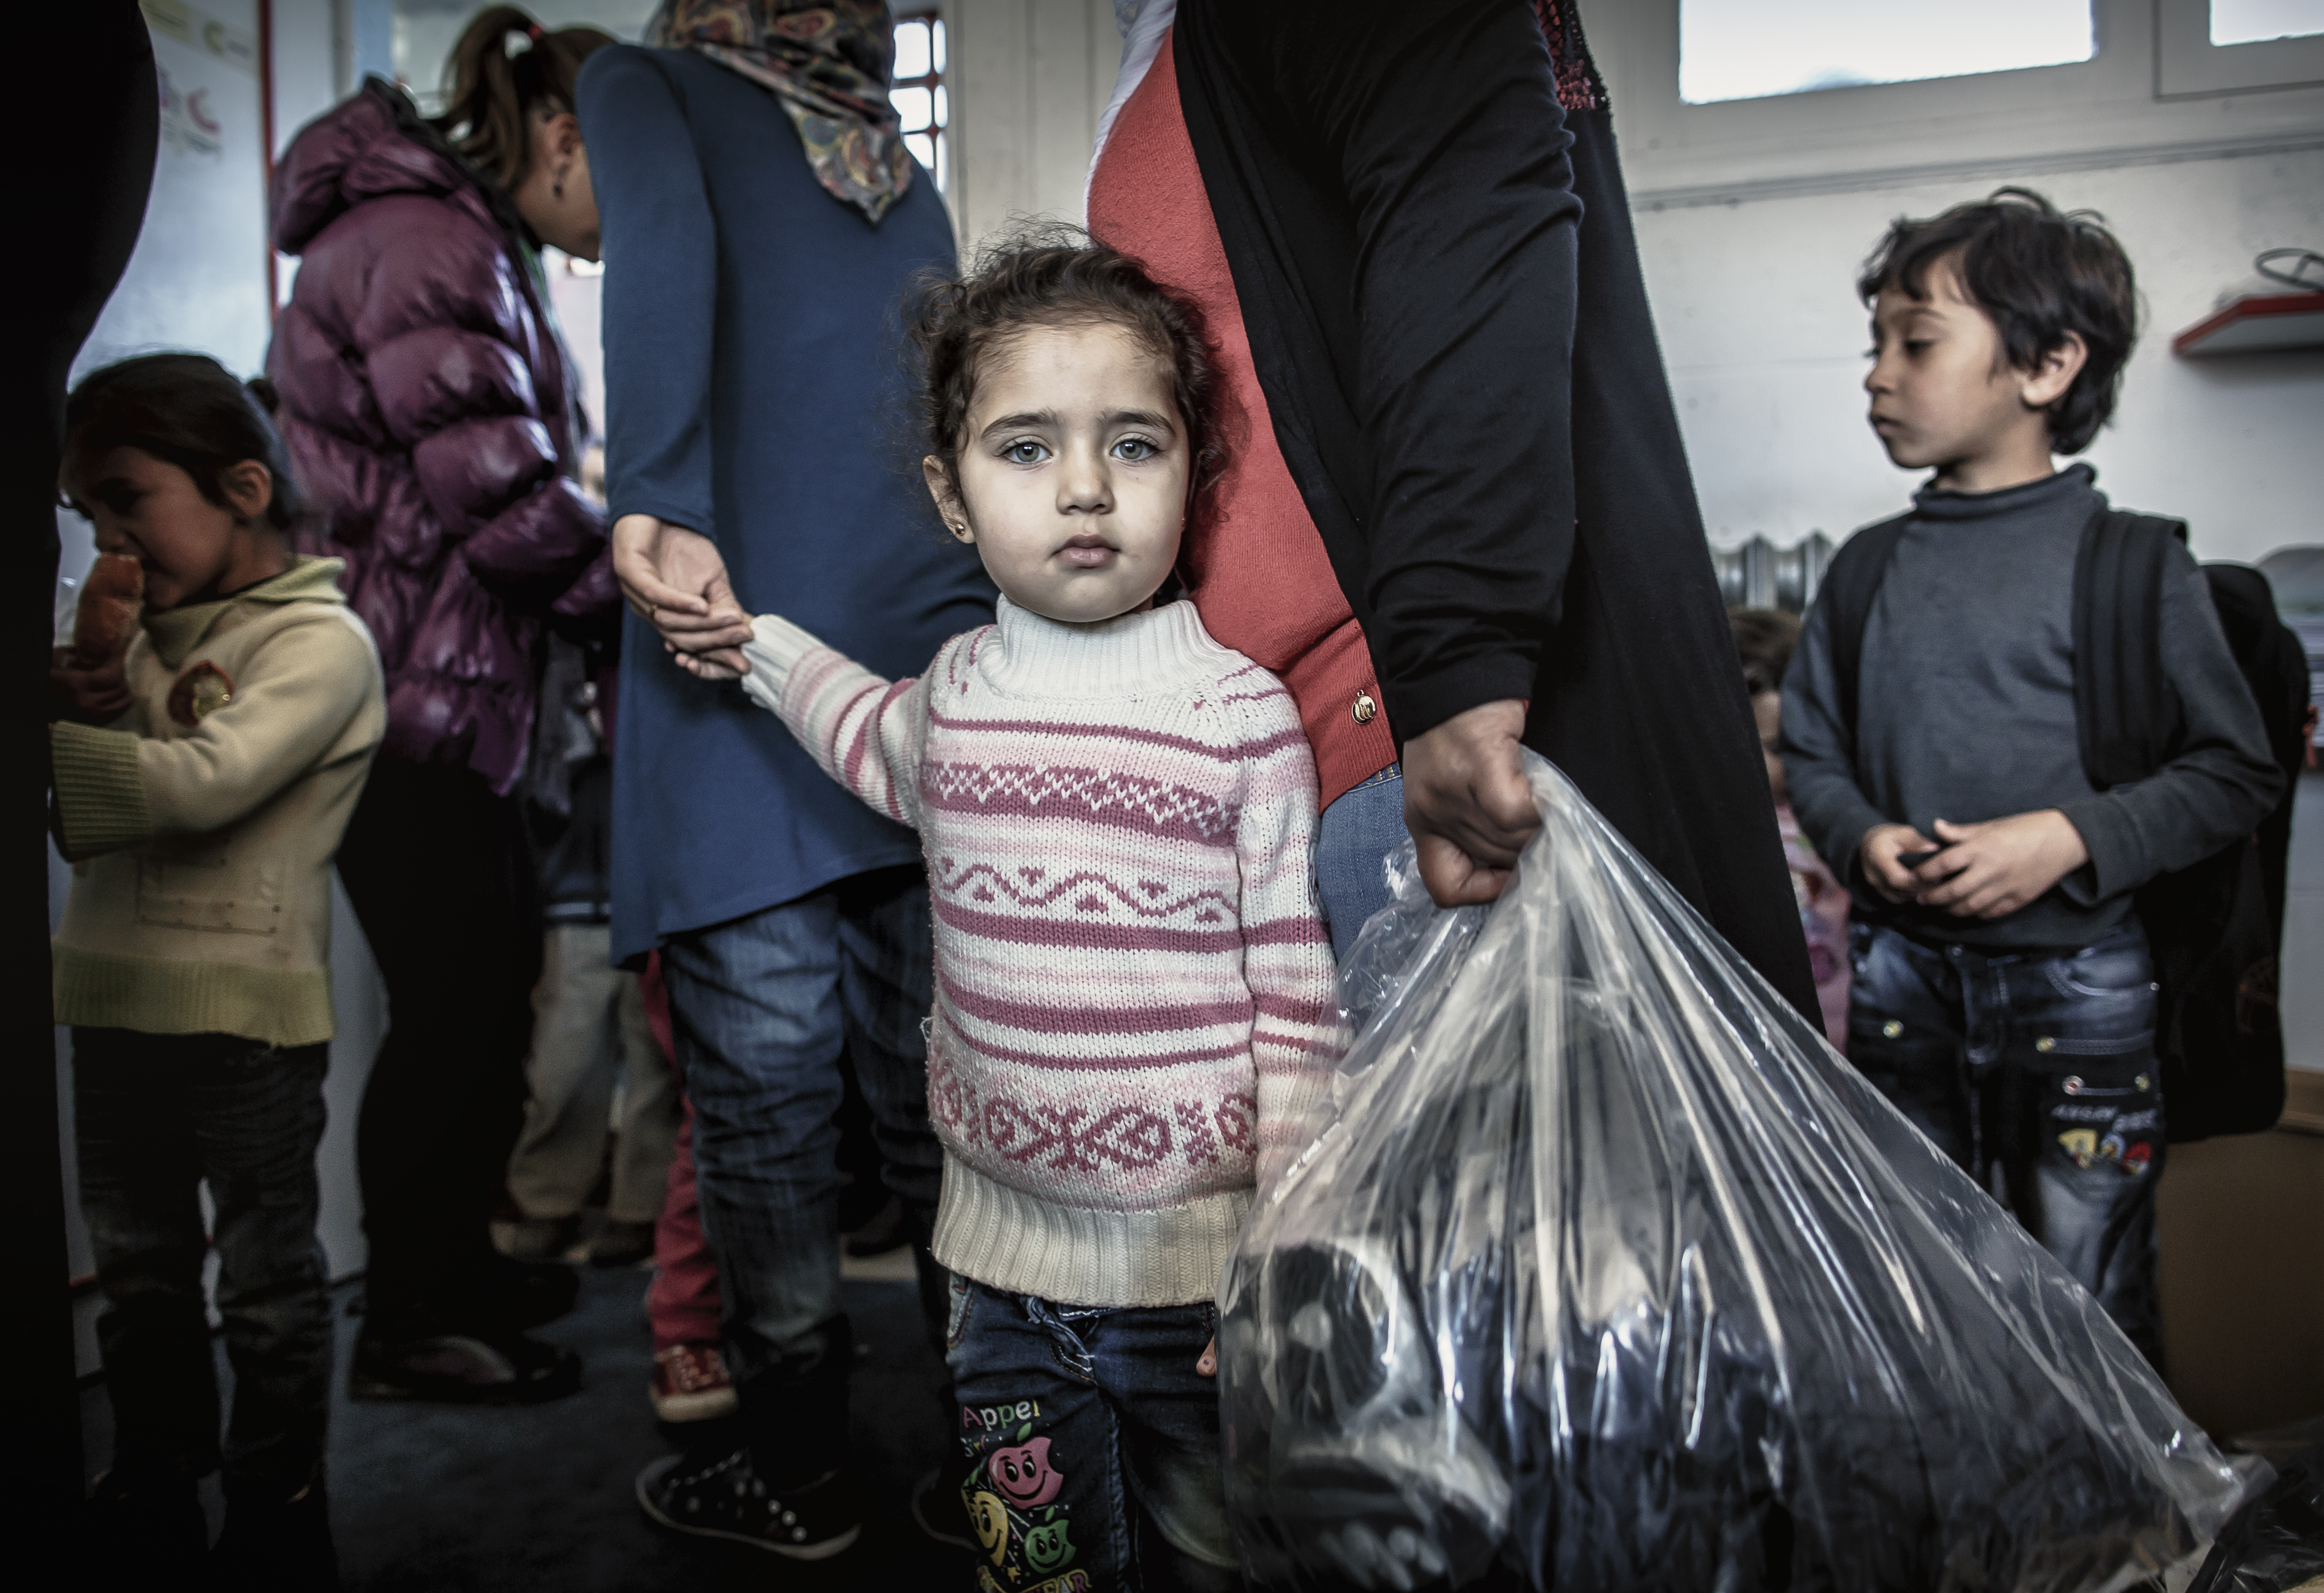 Kindernothilfe Hilfe fuer syrische Kinder im Kinderschutzzentrum. Quelle: Jakob Studnar 